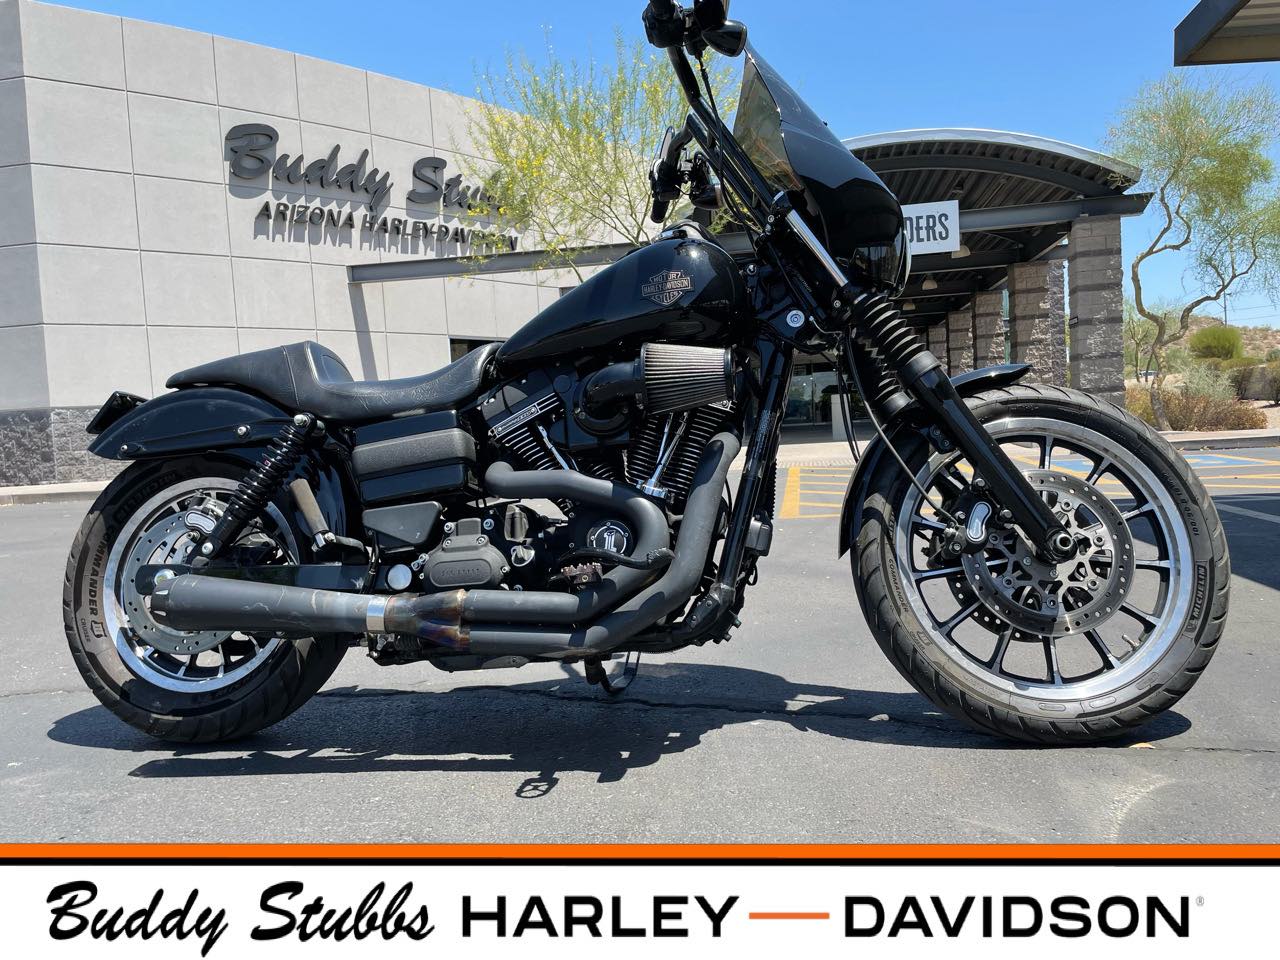 2016 Harley-Davidson S-Series Low Rider at Buddy Stubbs Arizona Harley-Davidson